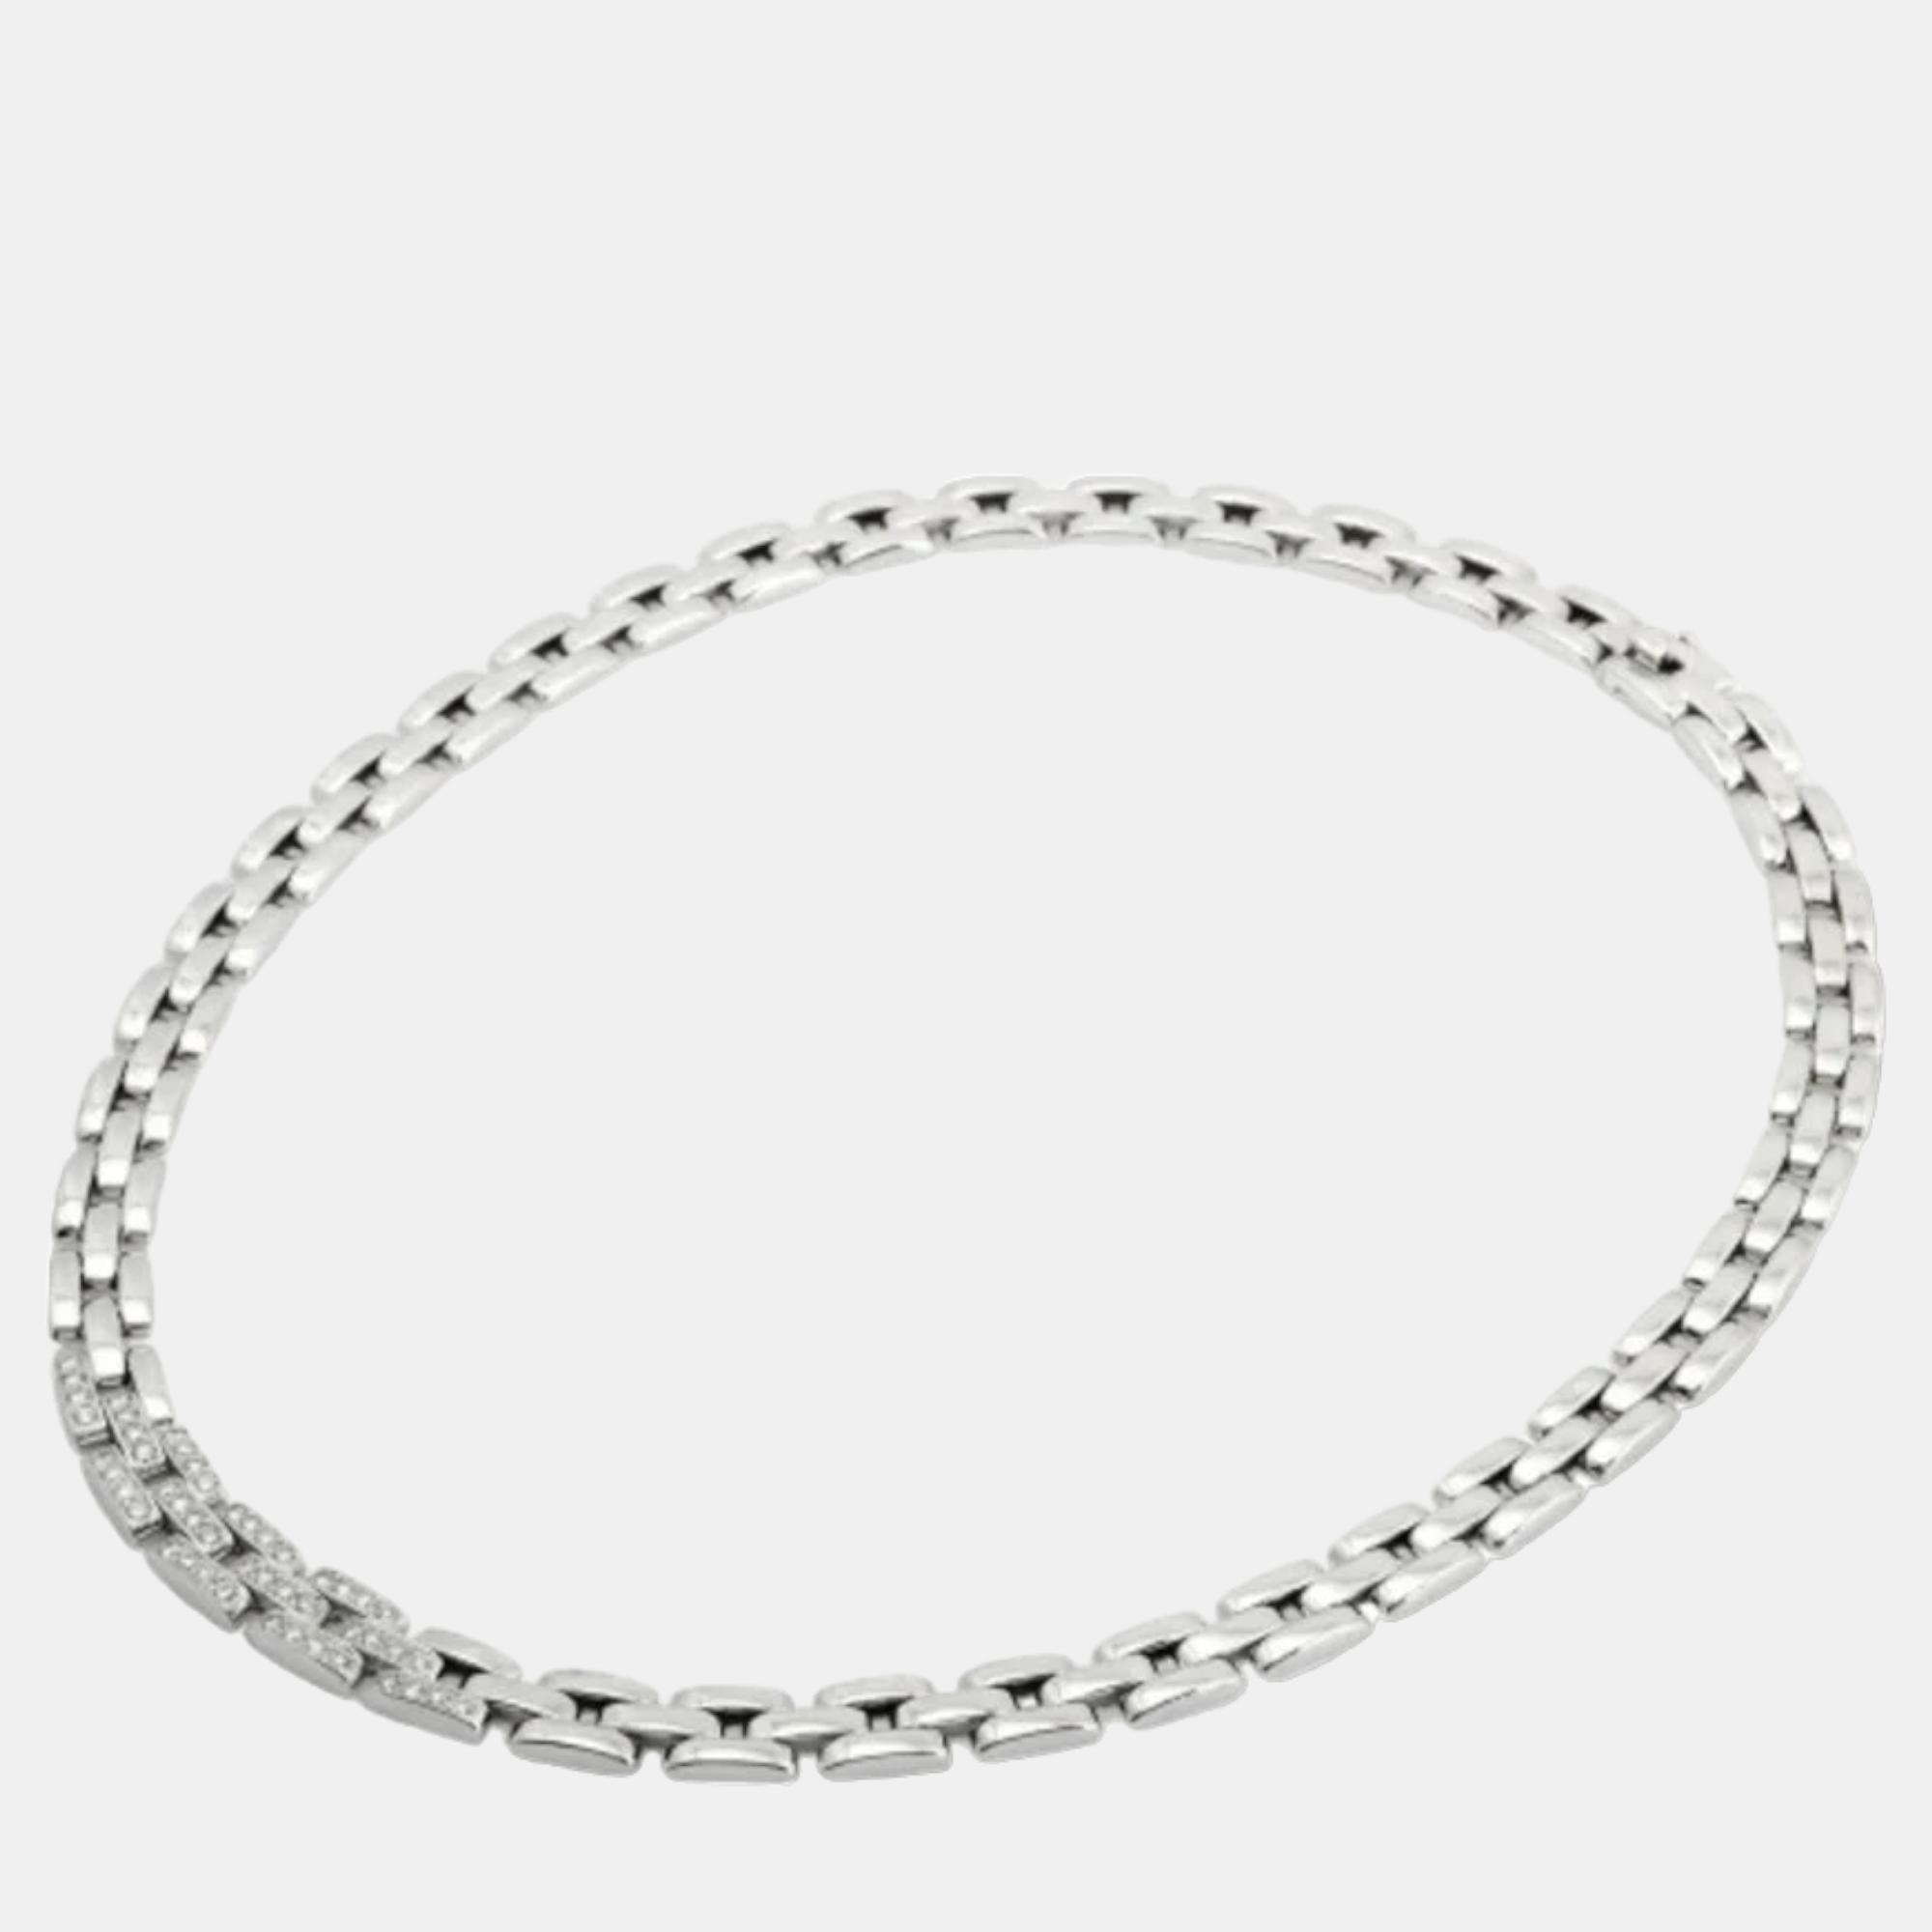 Cartier Mallion Panthere 18K White Gold Diamond Necklace